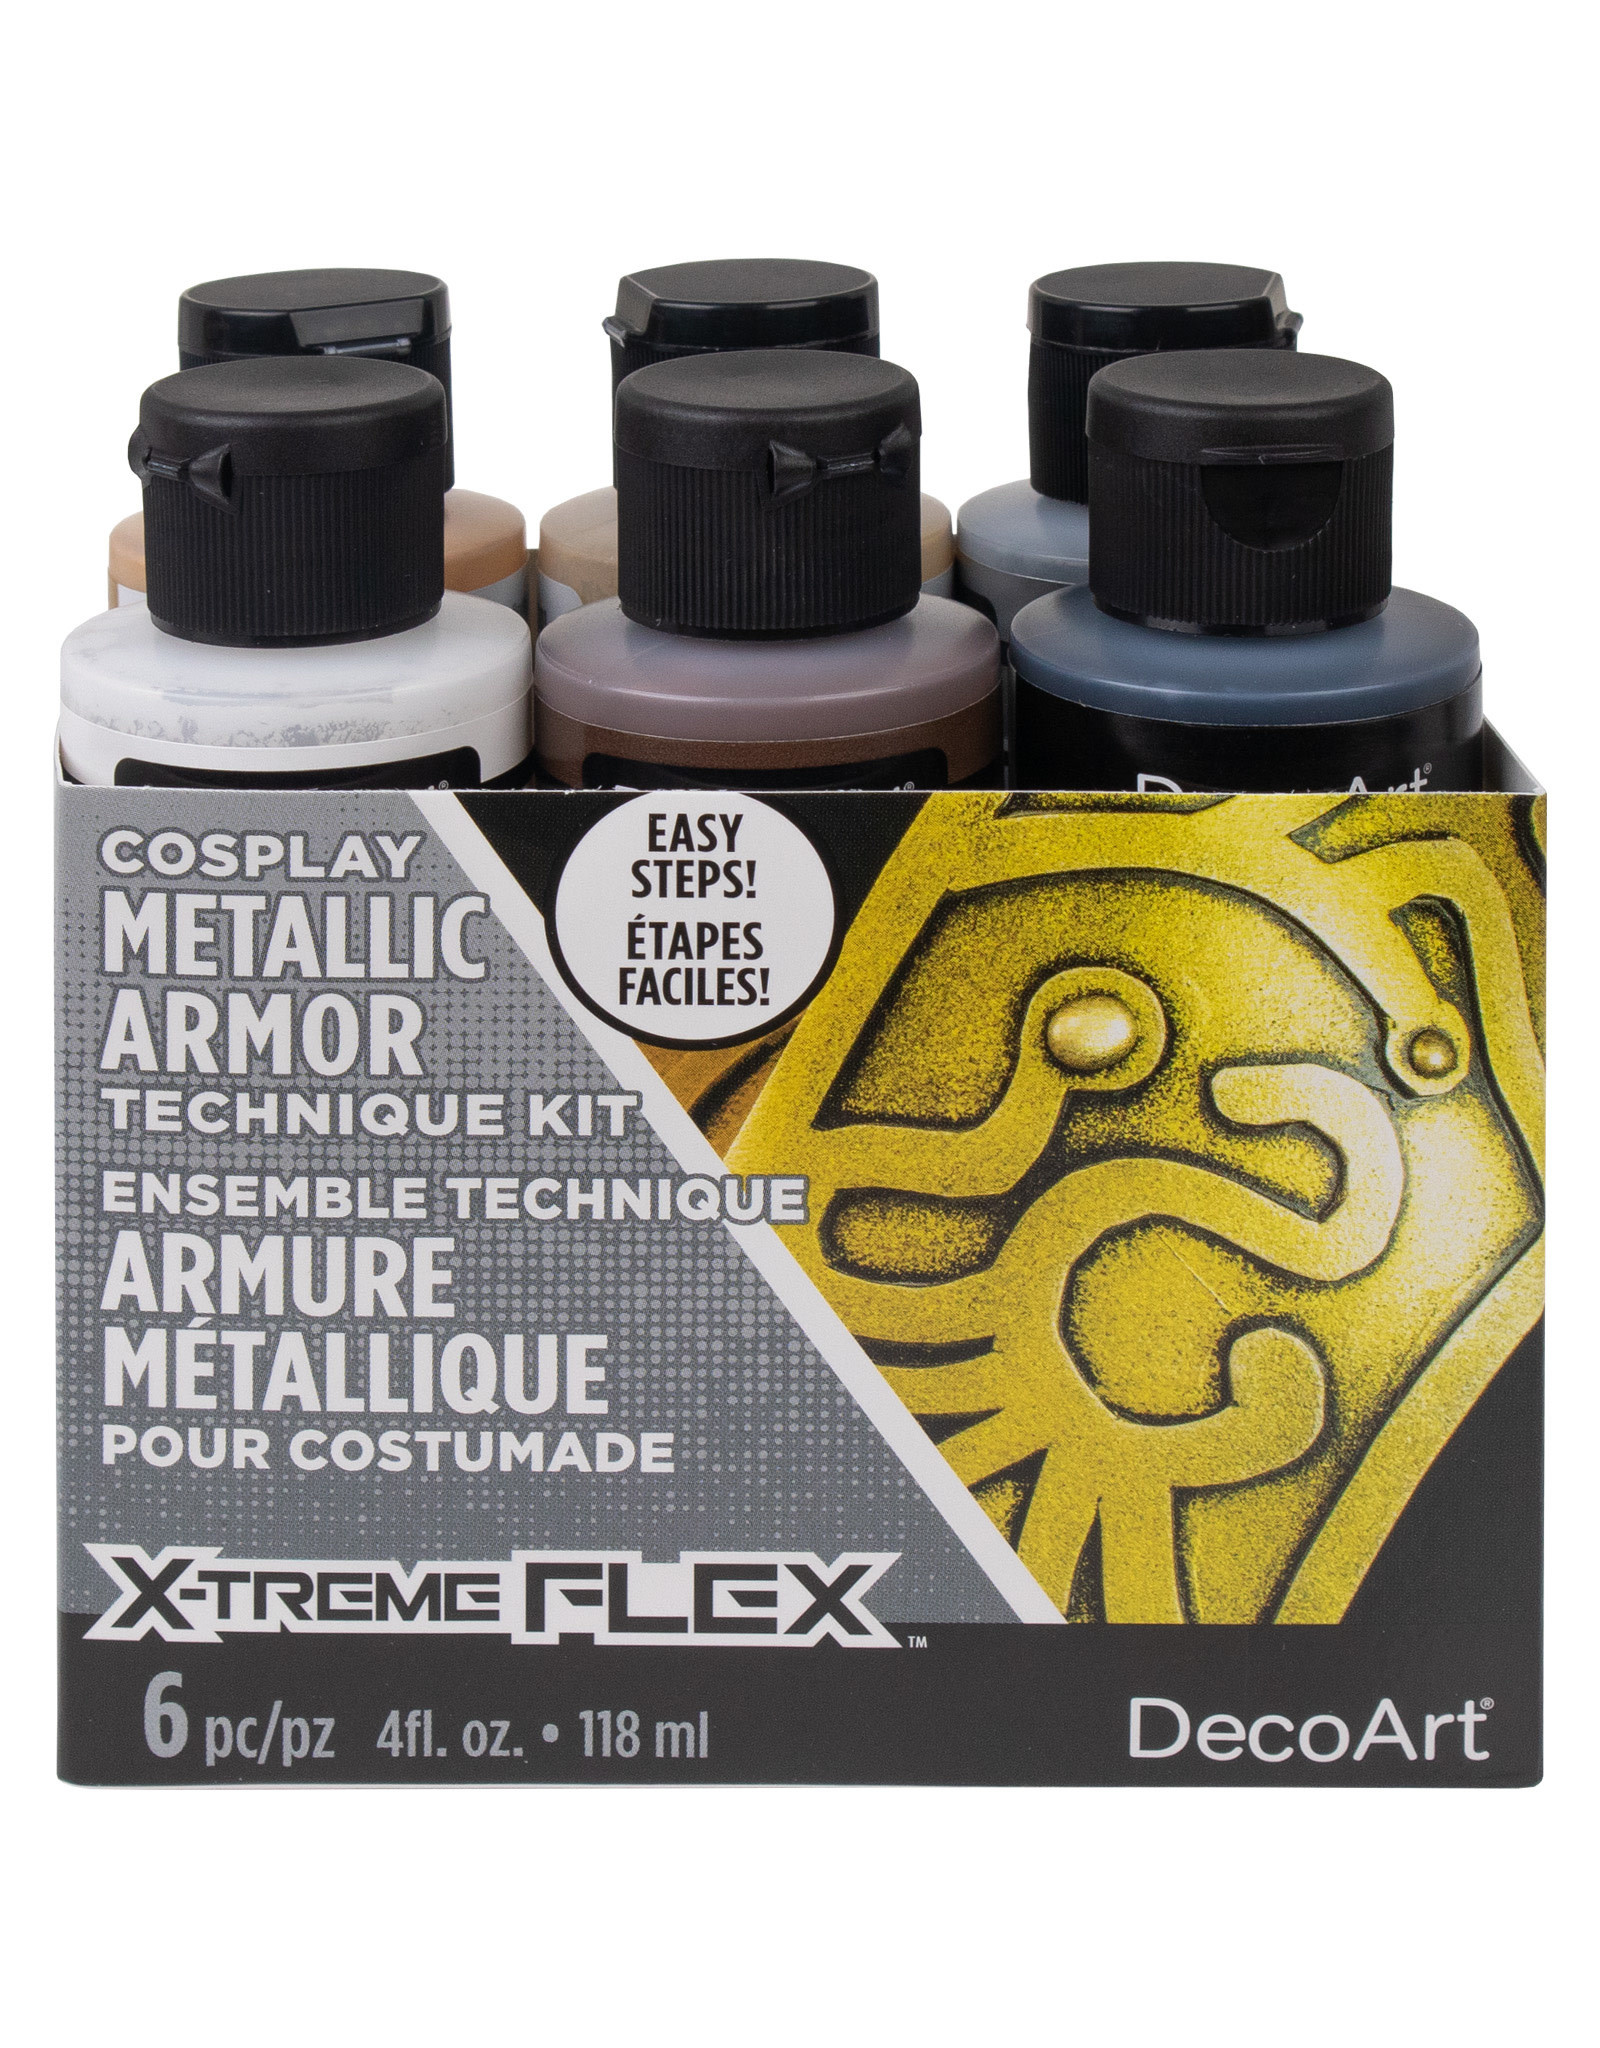 DecoArt DecoArt Cosplay Metallic Armor Technique Kit